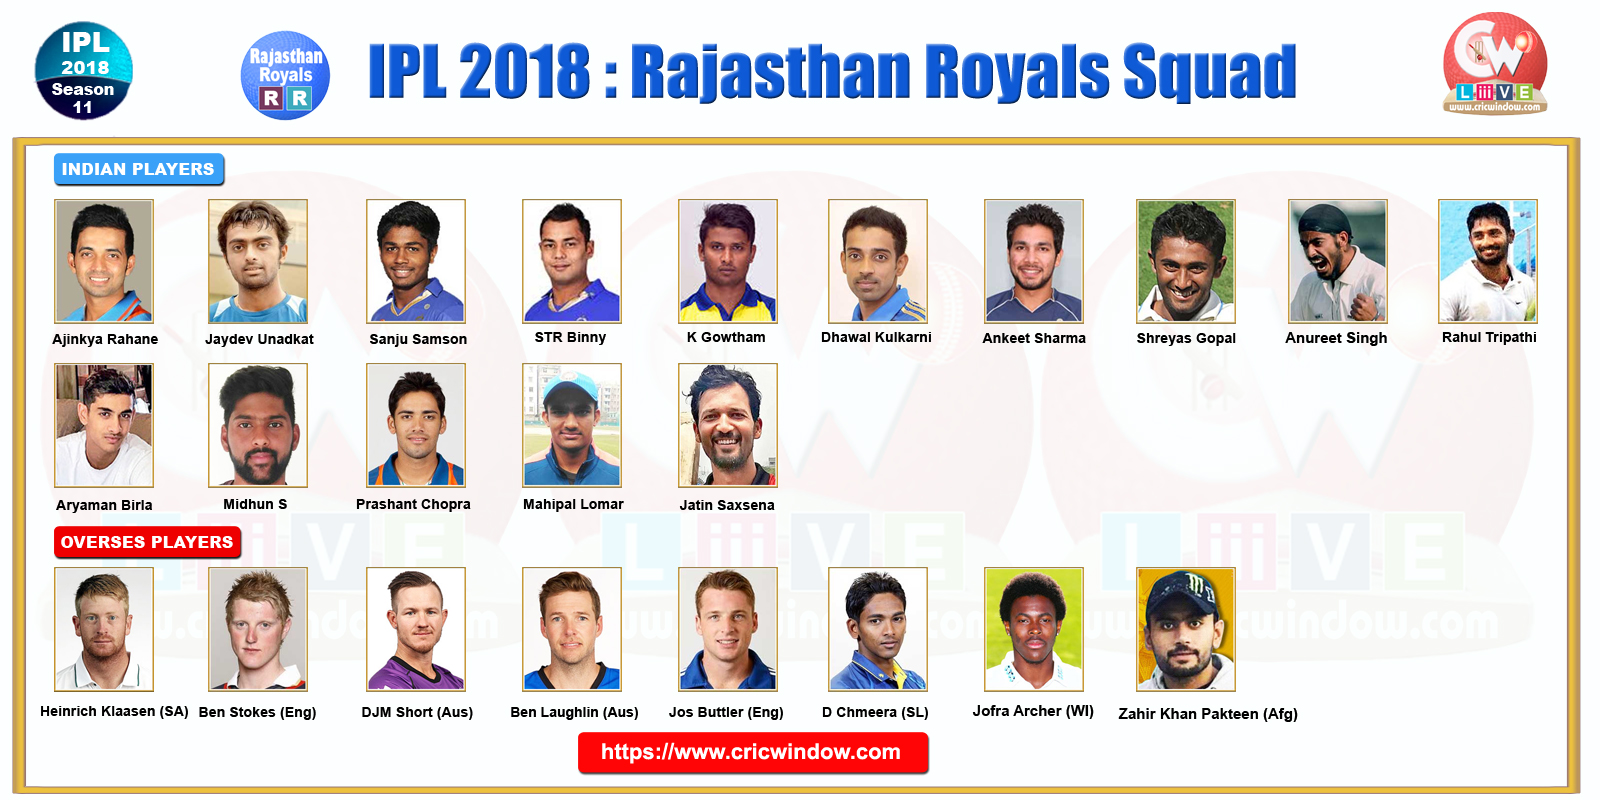 Rajasthan Royals team 2018